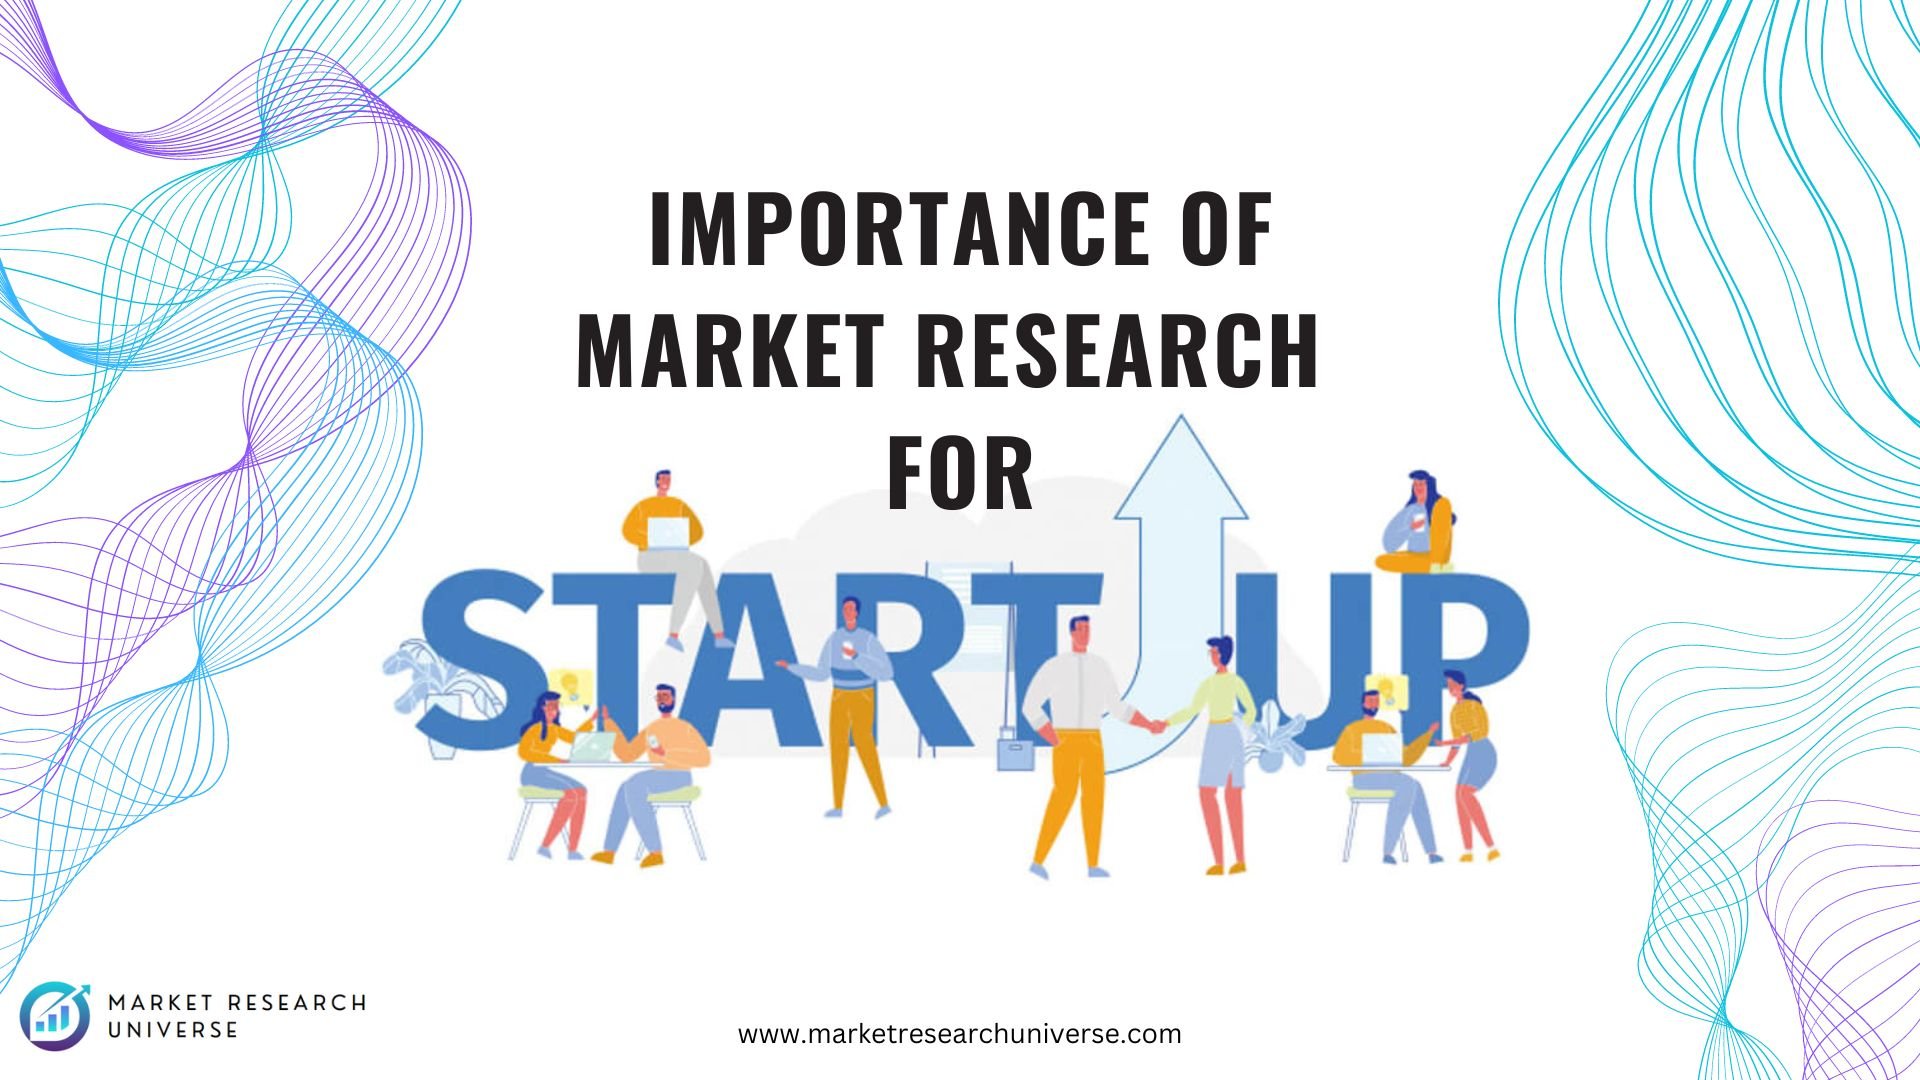 market research universe